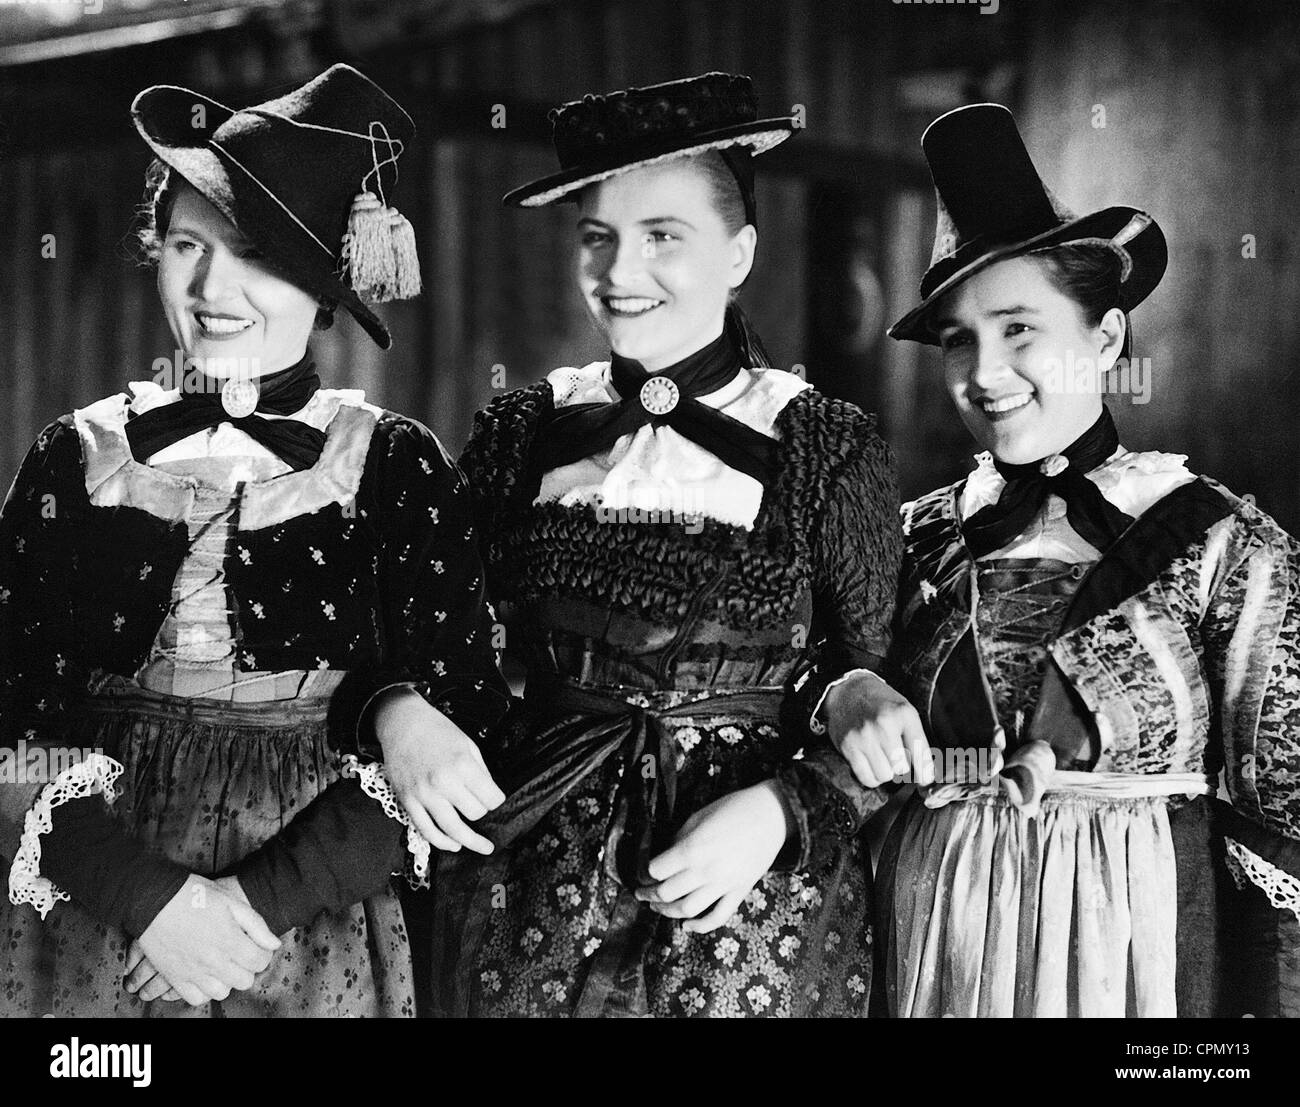 Martha Salm, Winnie Markus and Kaete Merk in 'Wally of the Vultures', 1940 Stock Photo